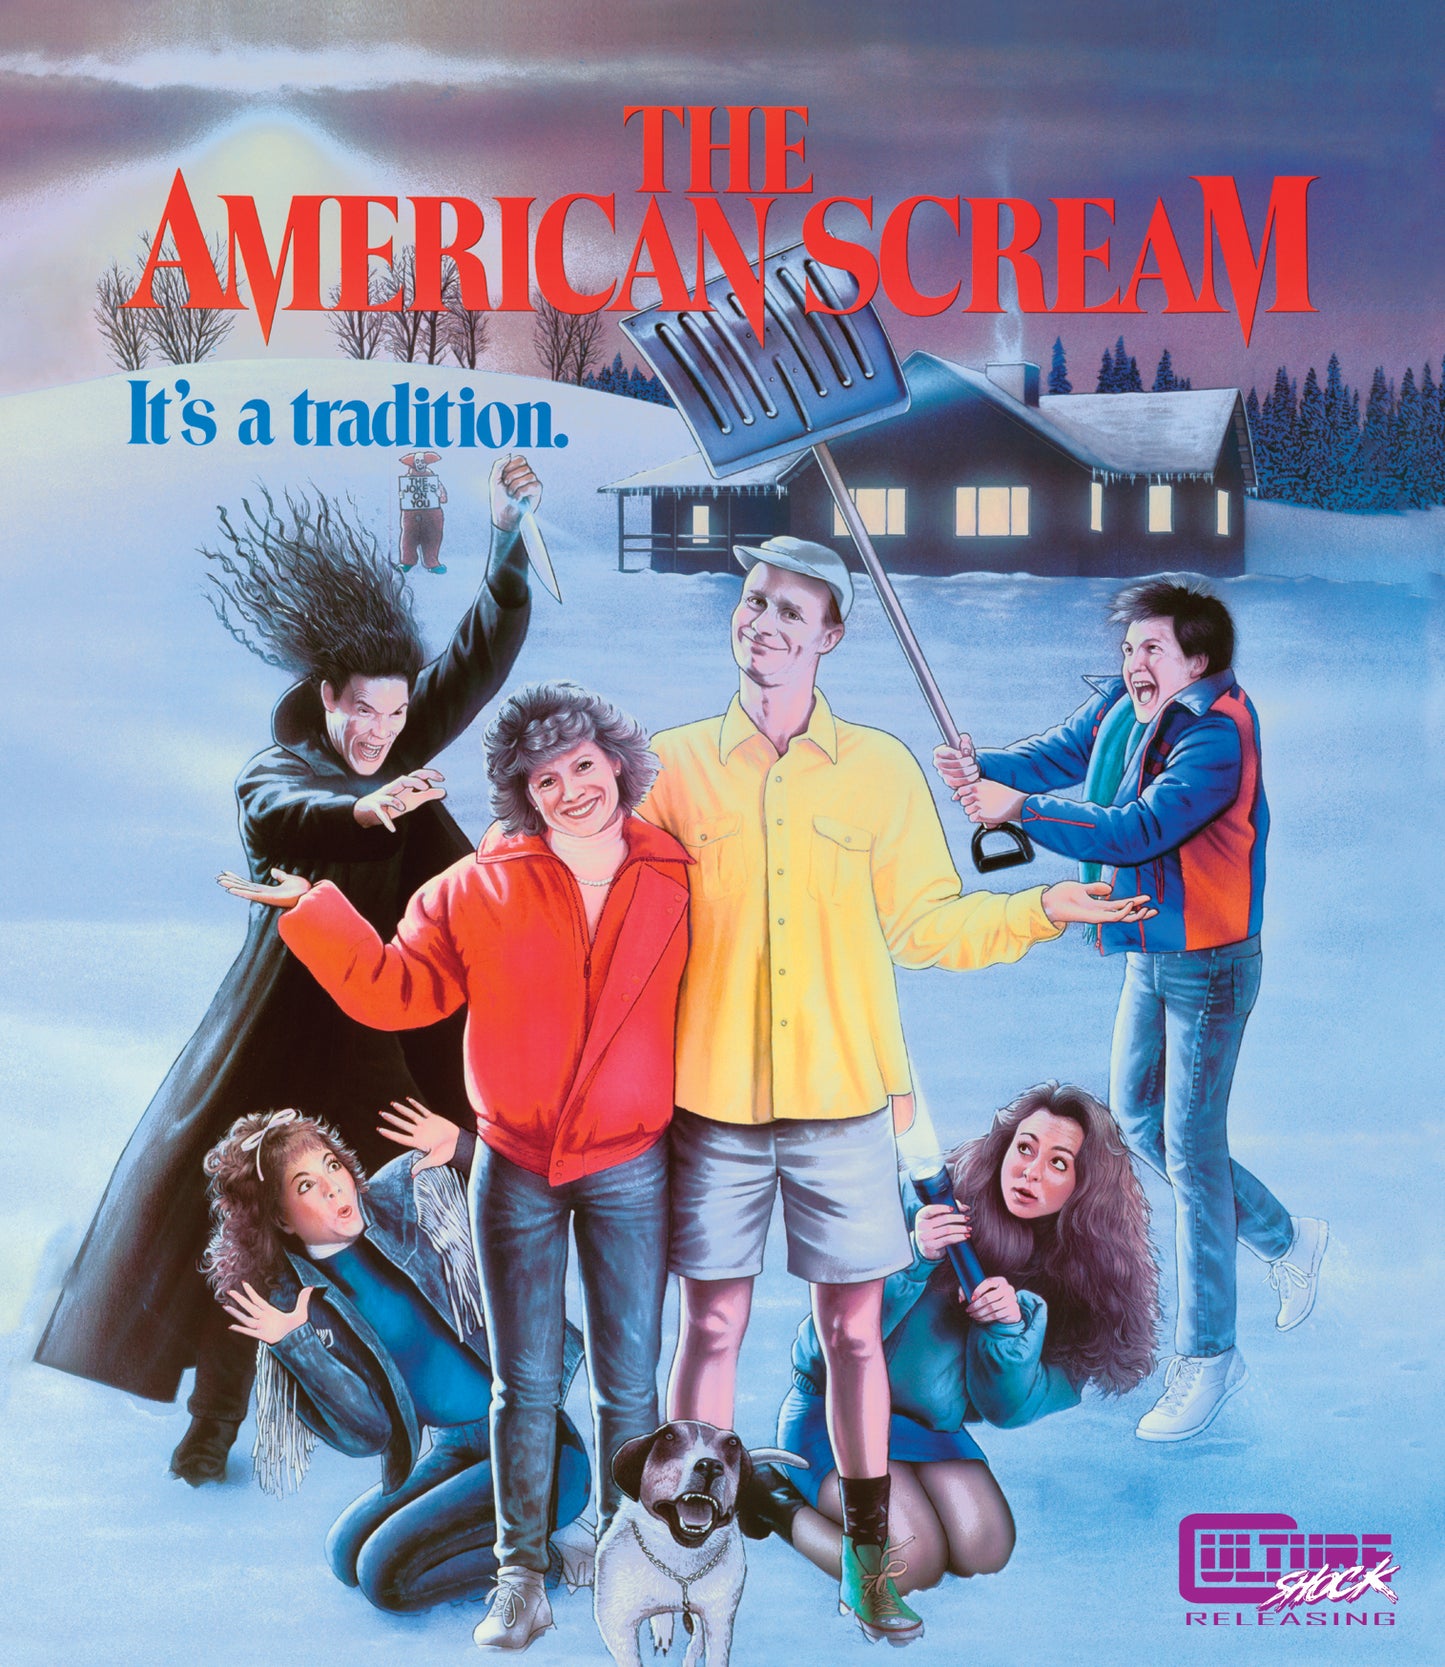 American Scream [Blu-ray] cover art